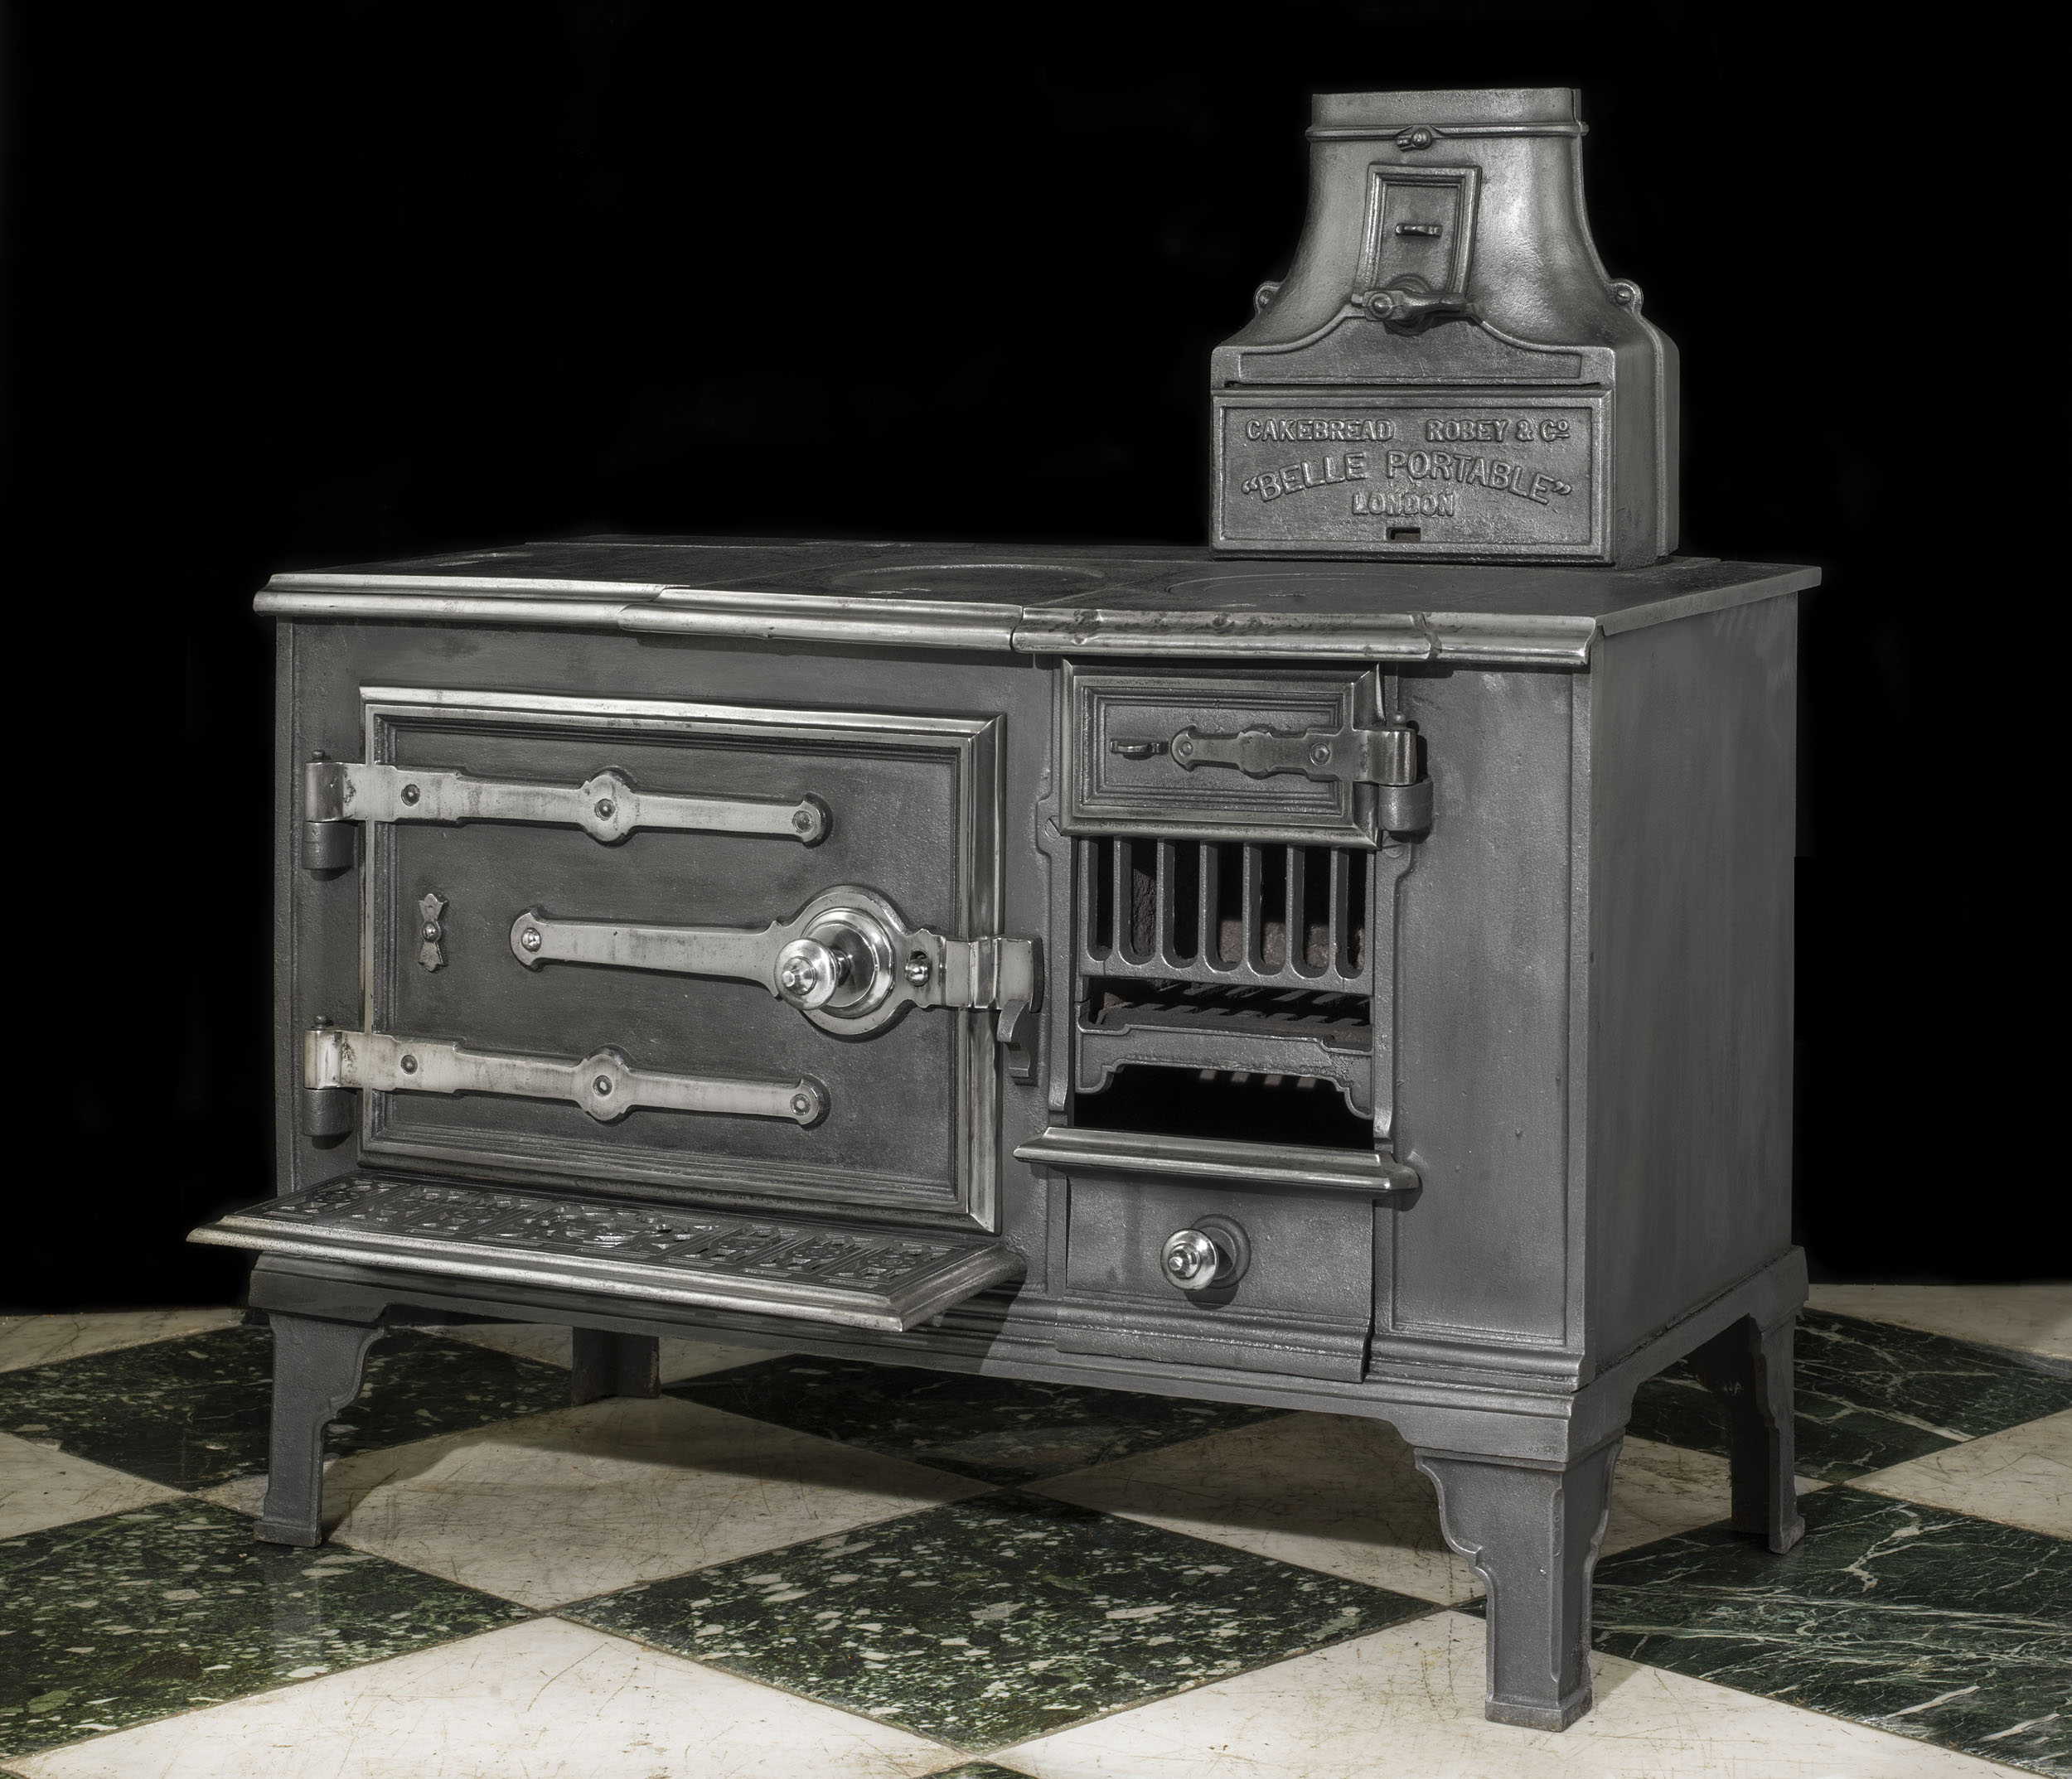 A Portable Victorian Cast Iron Kitchen Range